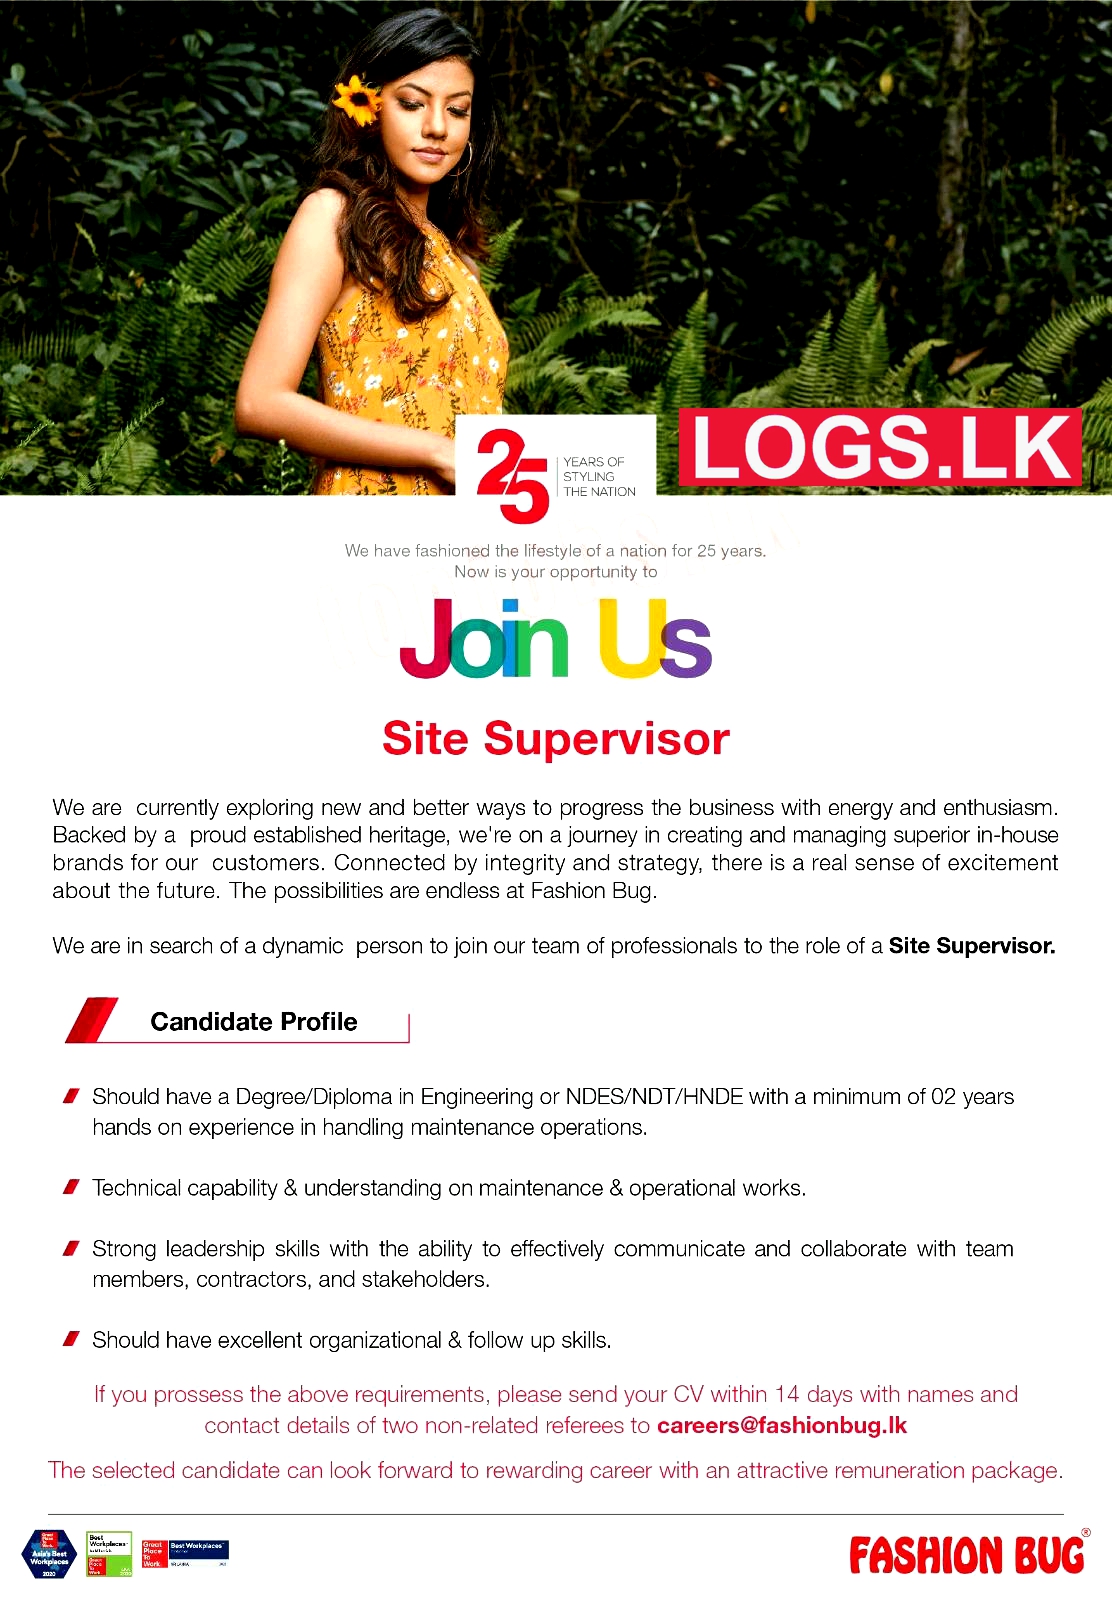 Site Supervisor Job Vacancy at Fashion Bug (Pvt) Ltd Job Vacancies in Sri Lanka